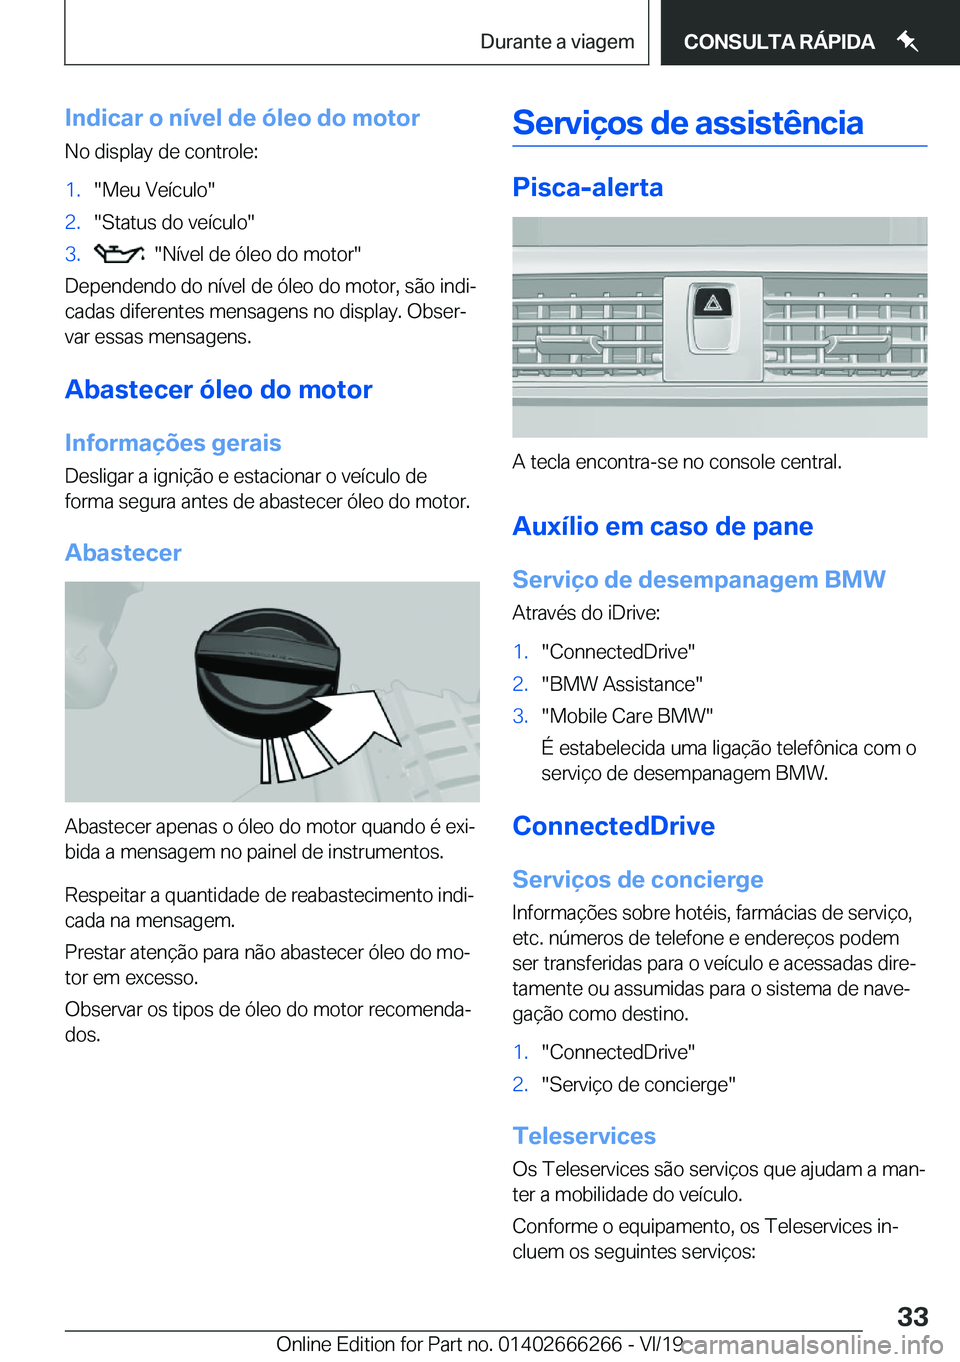 BMW 2 SERIES COUPE 2020  Manual do condutor (in Portuguese) �I�n�d�i�c�a�r��o��n�